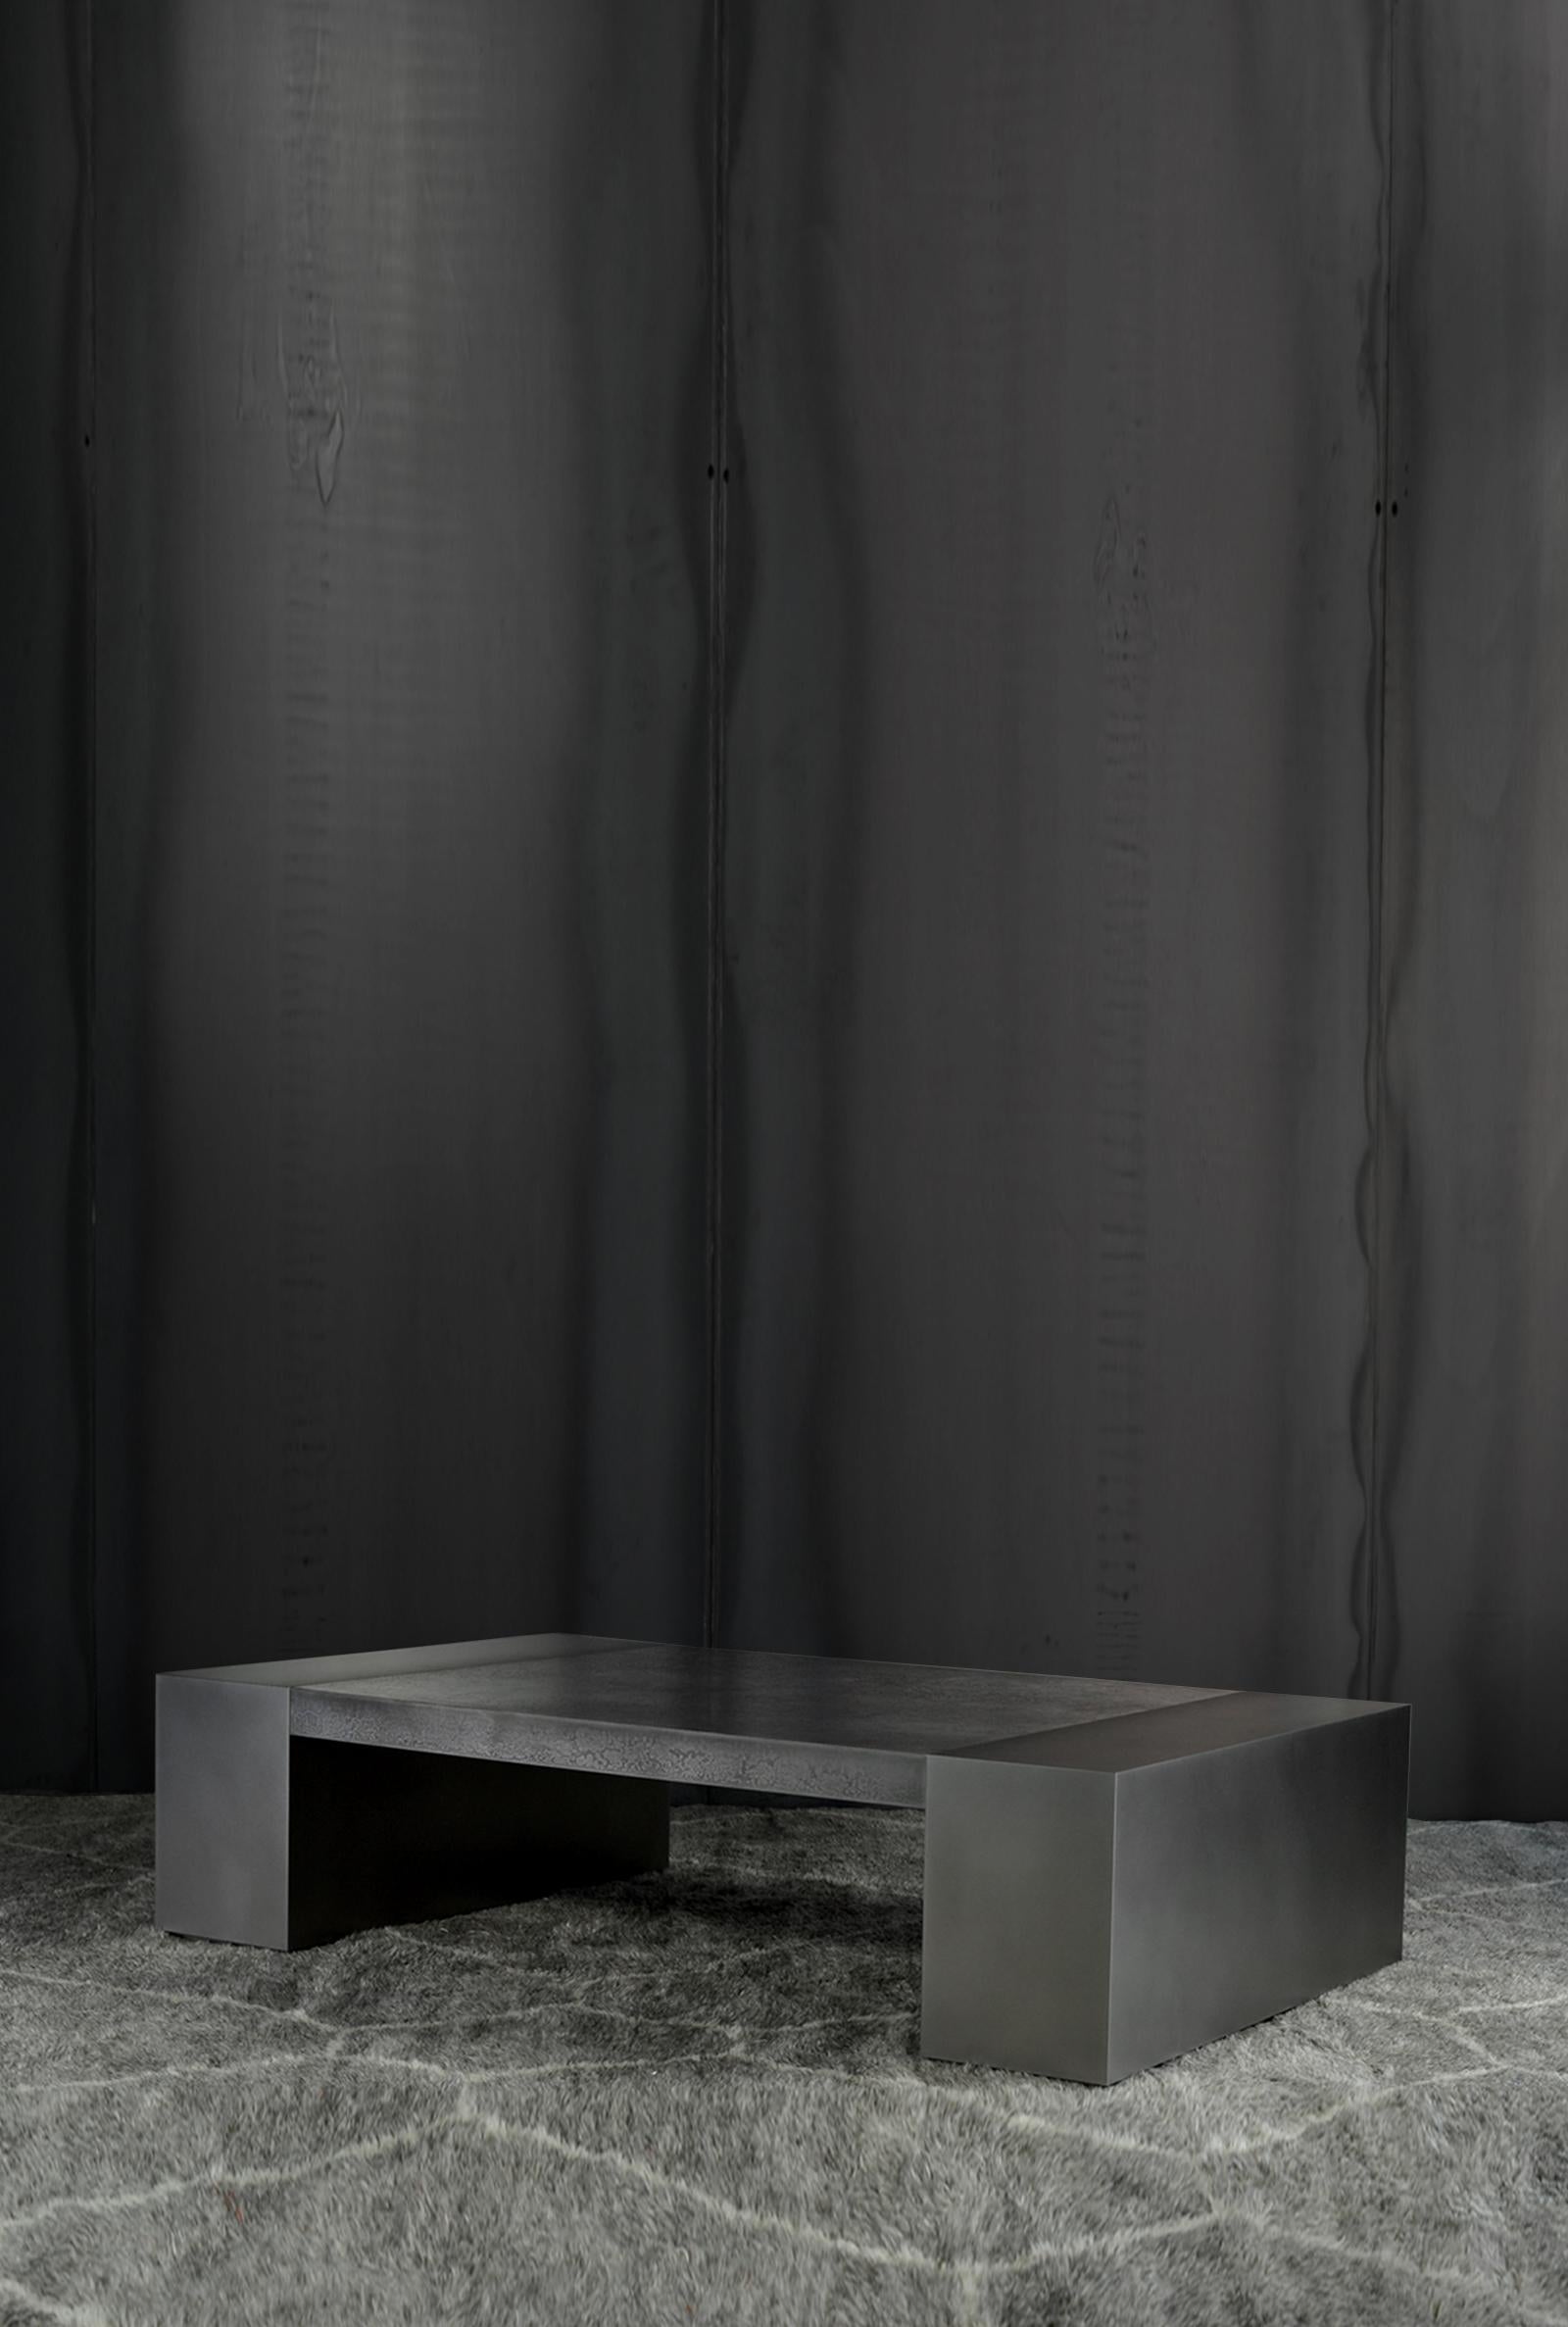 American LUMA Design Workshop Block Coffee Table in Dark Resin and Textured Bronze Metal For Sale